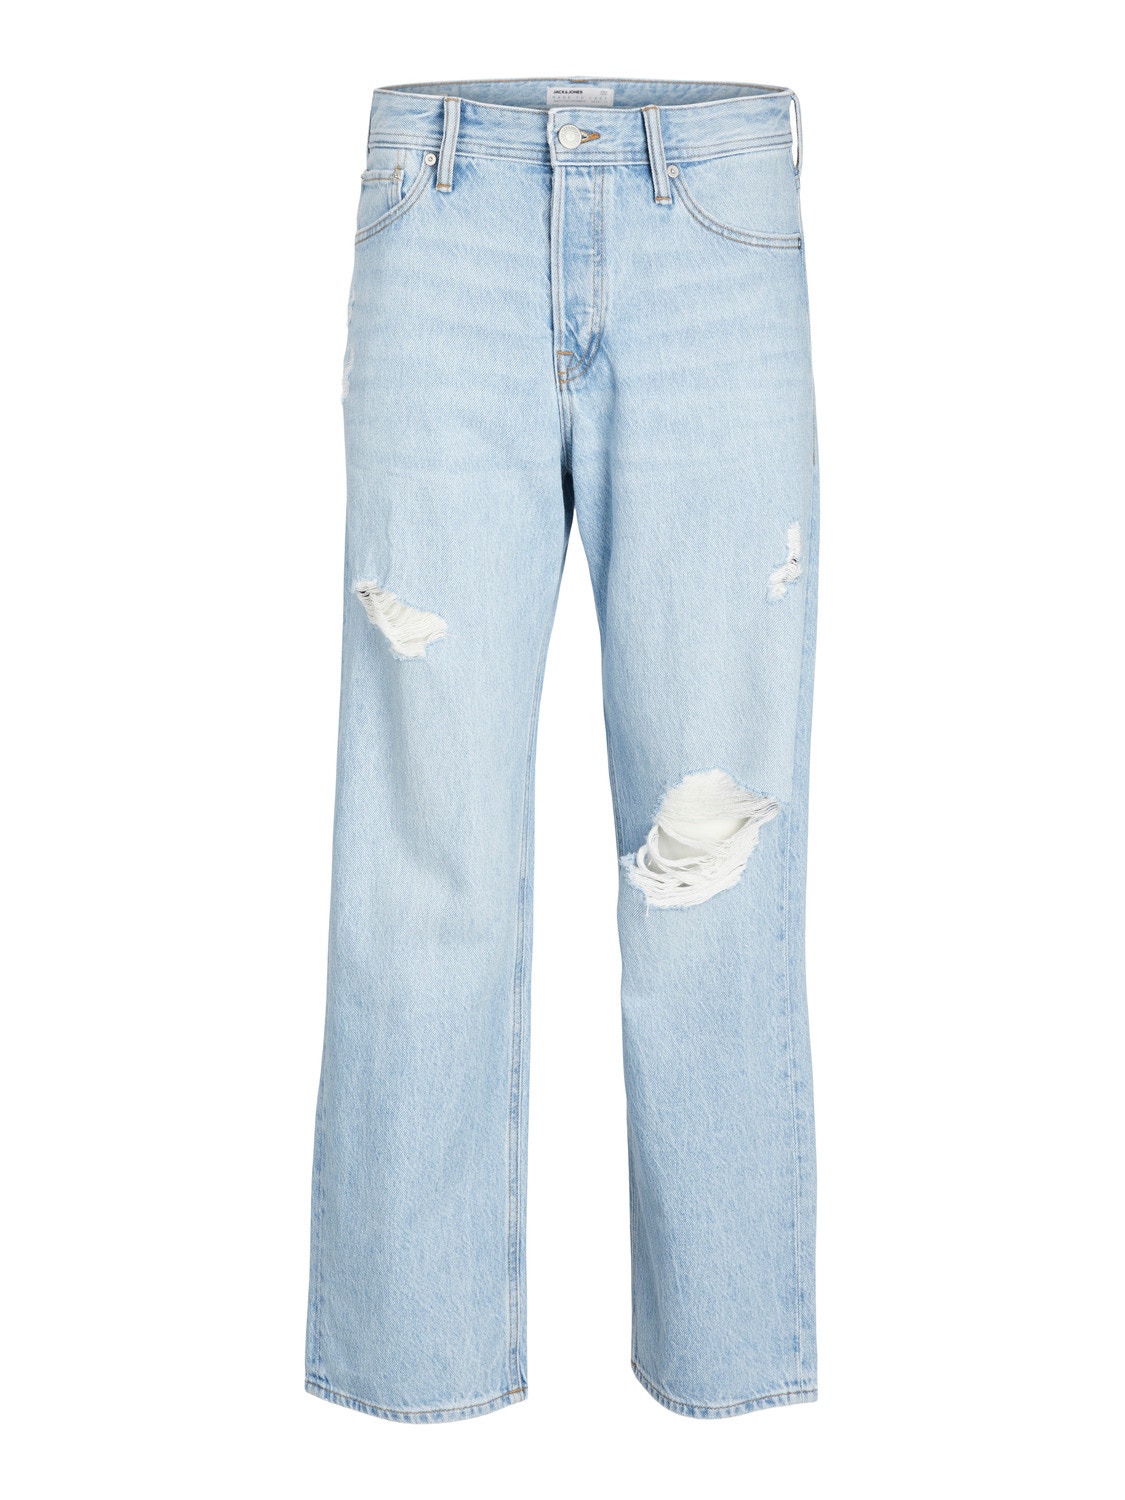 Plus Size JJIEDDIE JJUTILITY SBD 306 PLS Loose fit jeans with 40% discount!